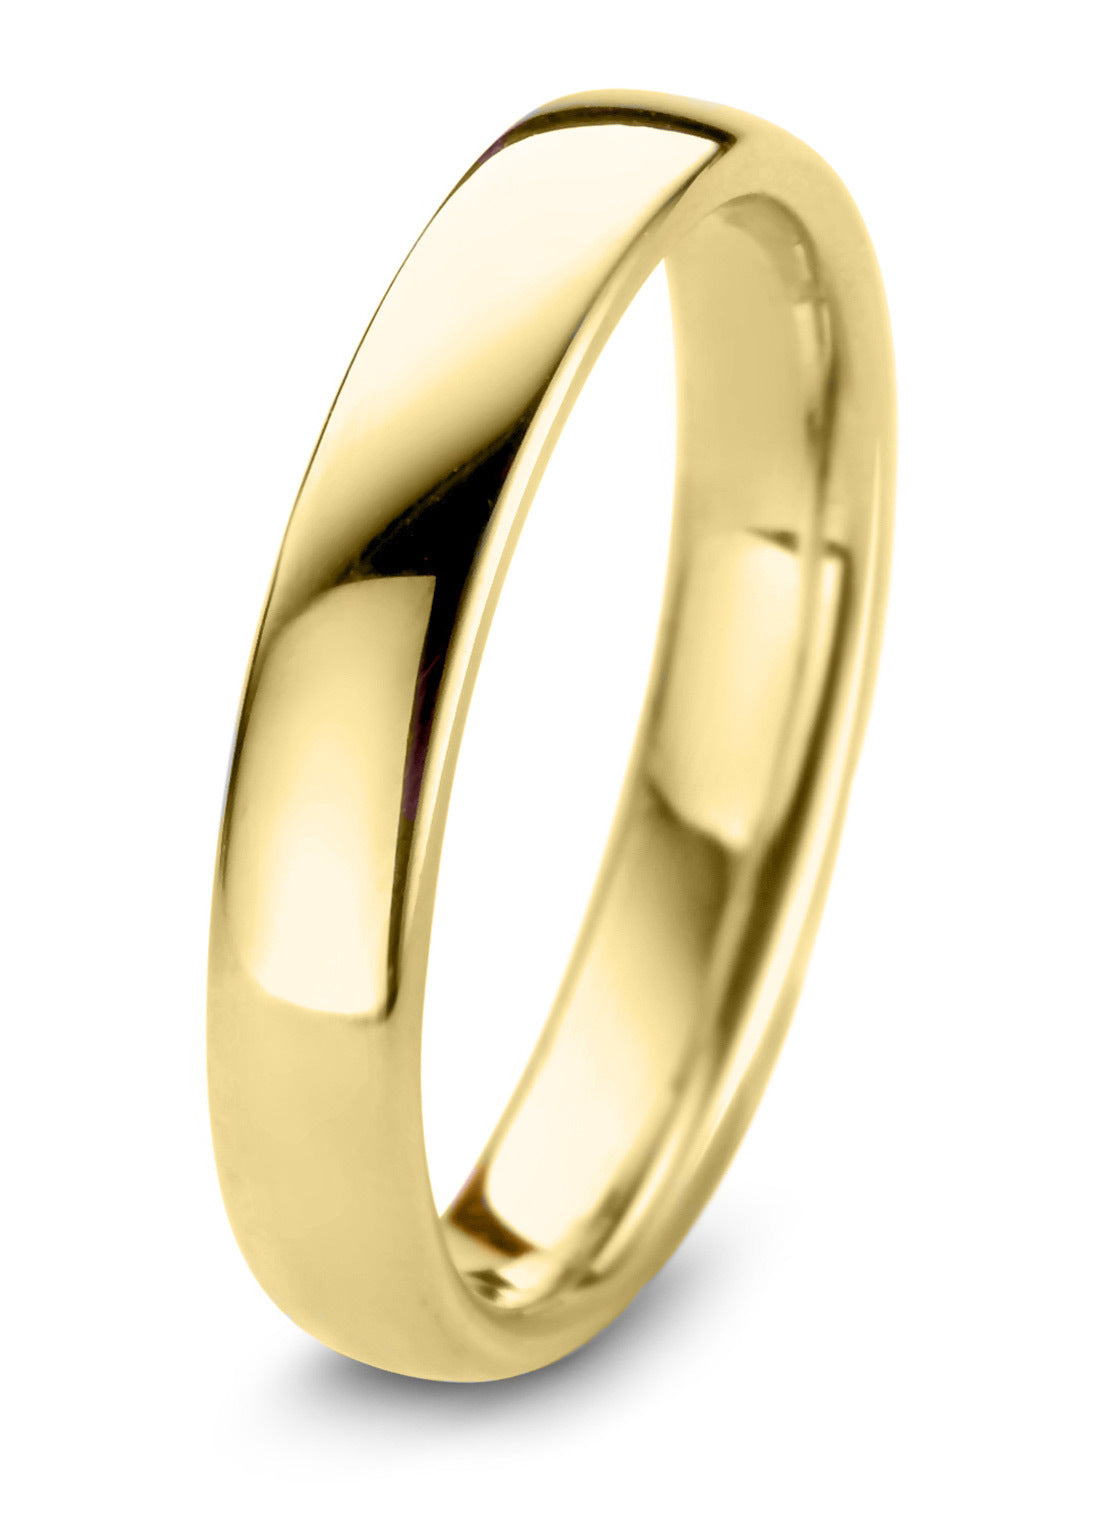 Yellow gold 18 kt wedding ring